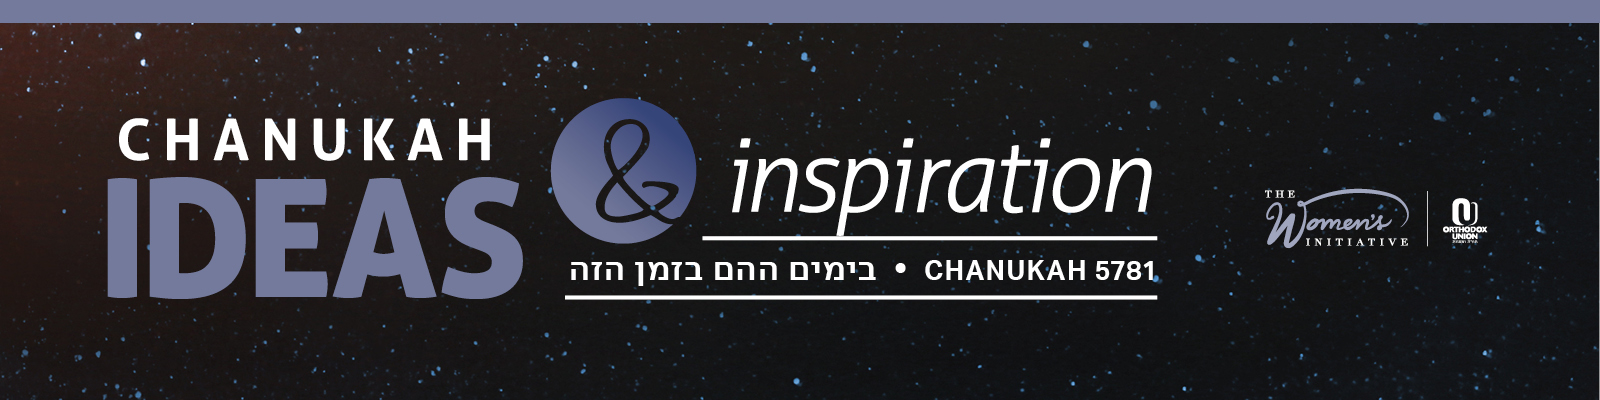 Chanukah Ideas and Inspiration 2021